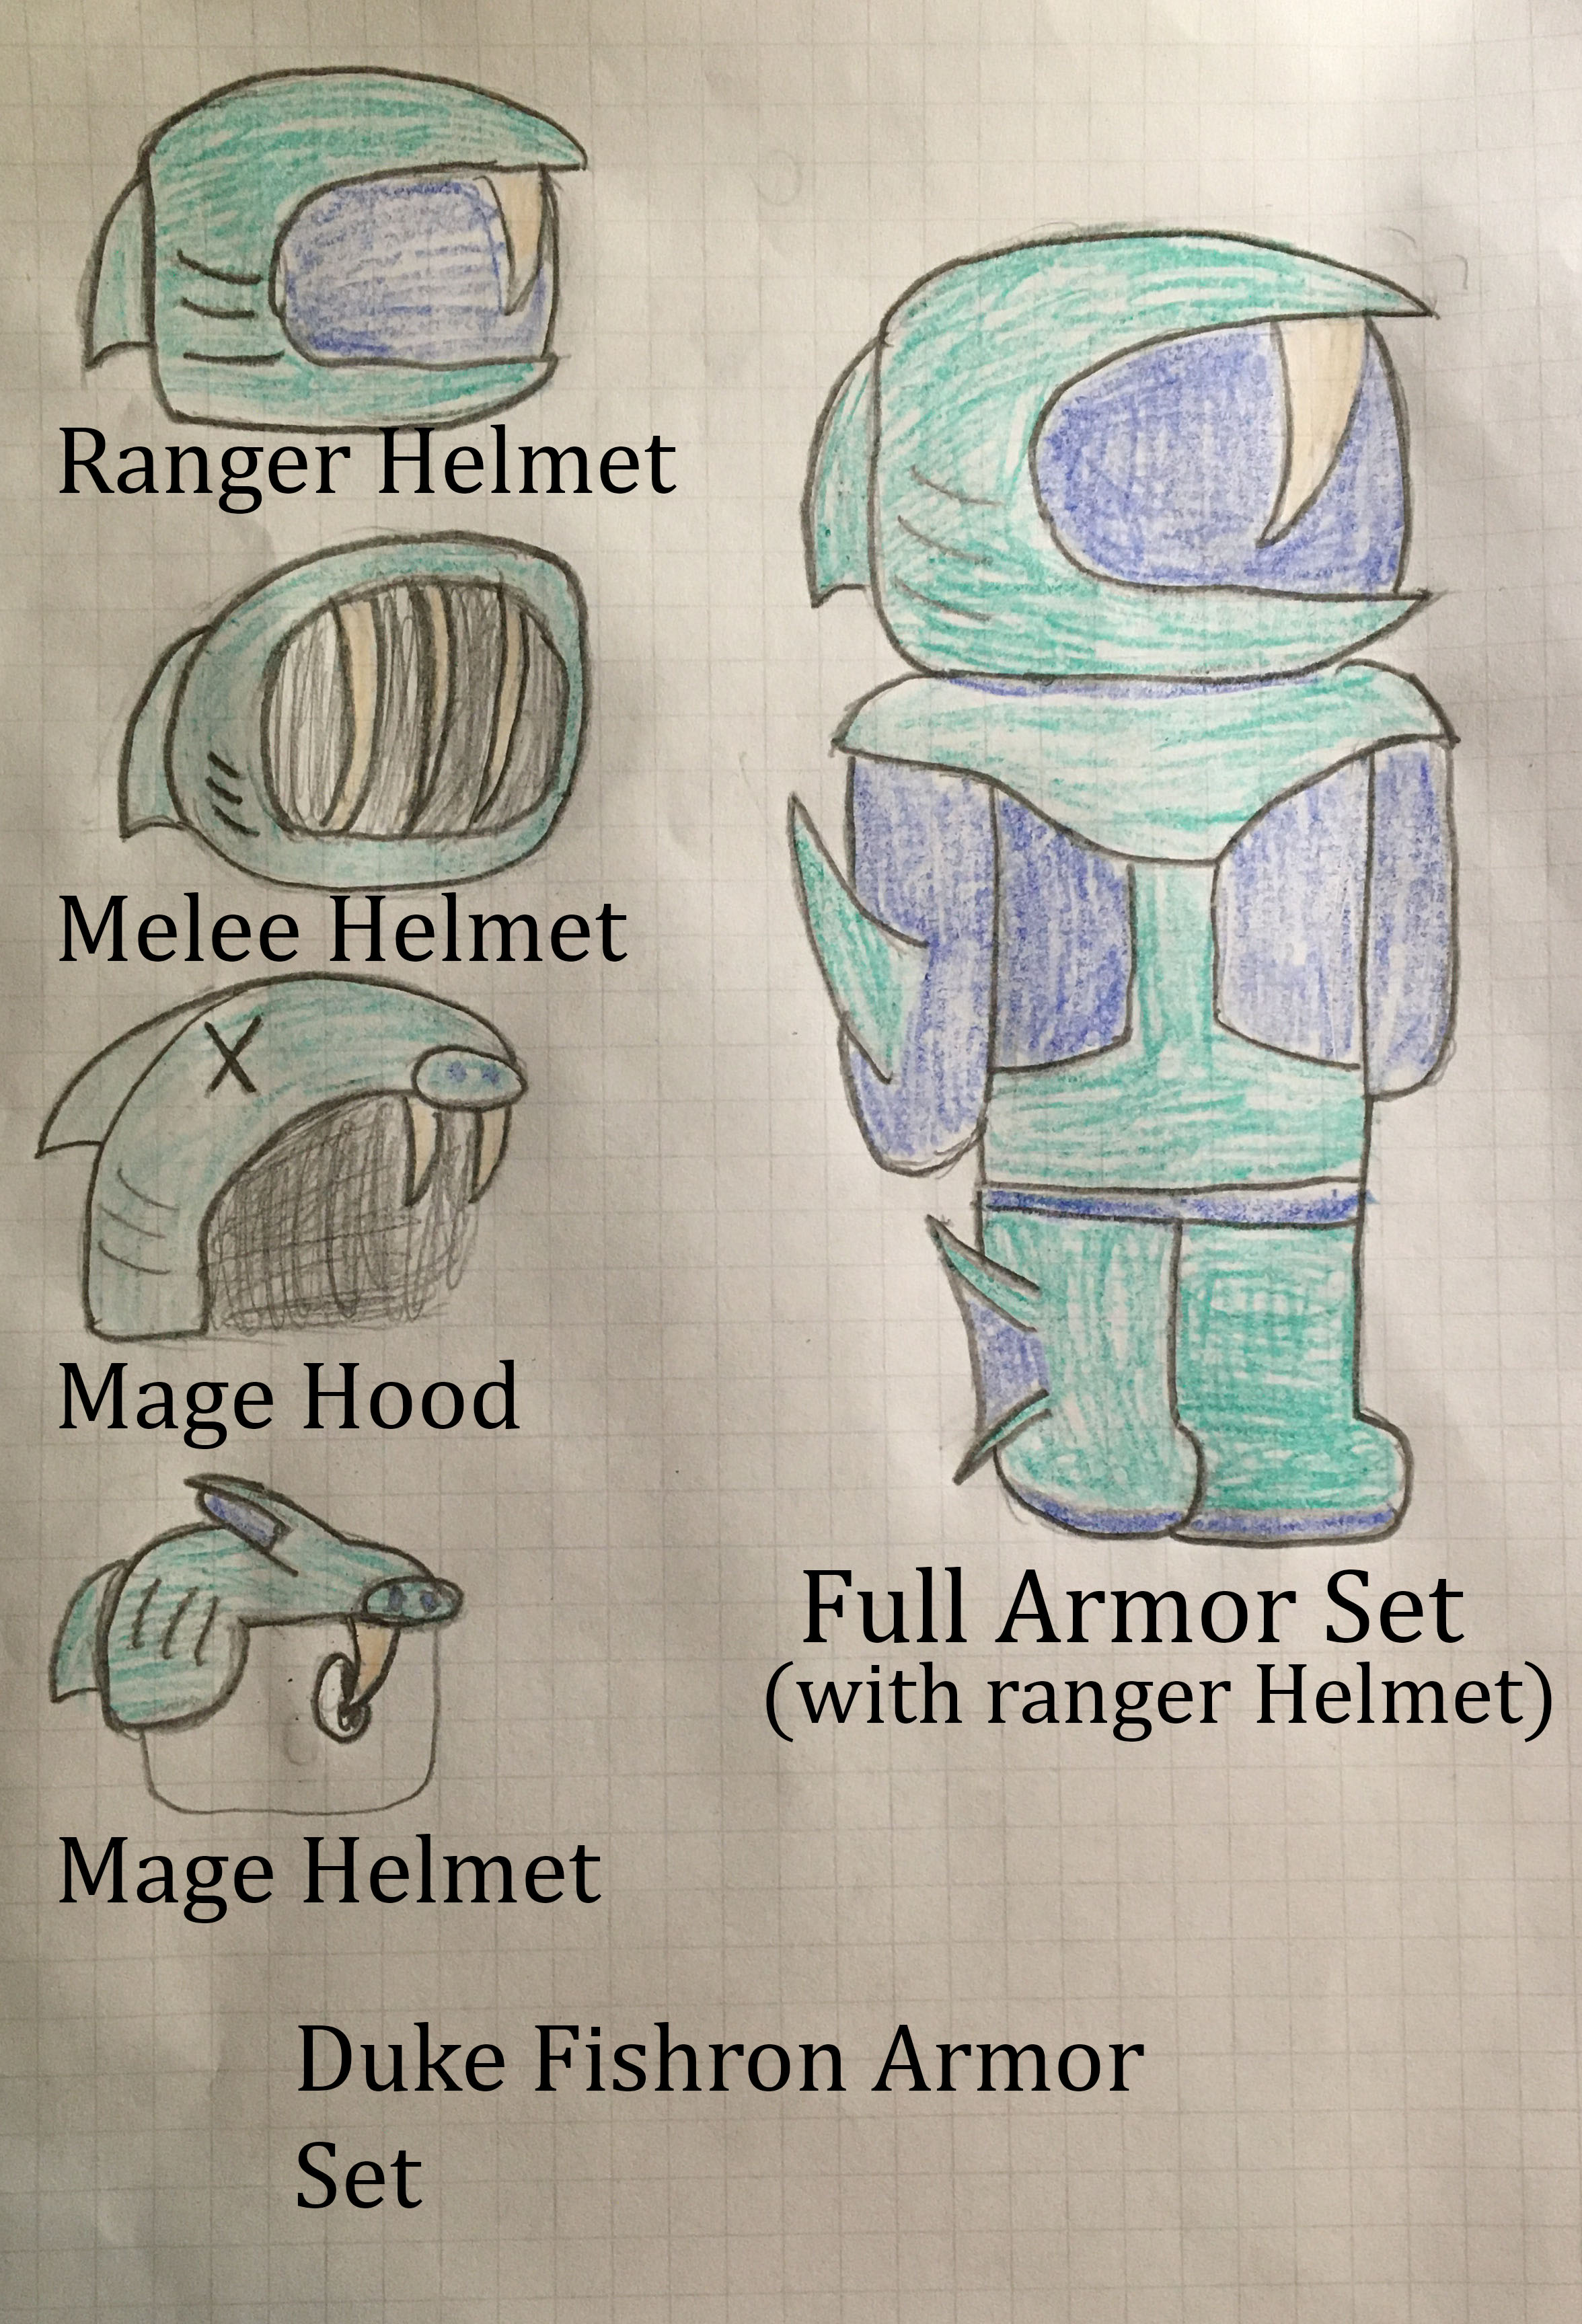 Duke Fishron Armor Set.jpg